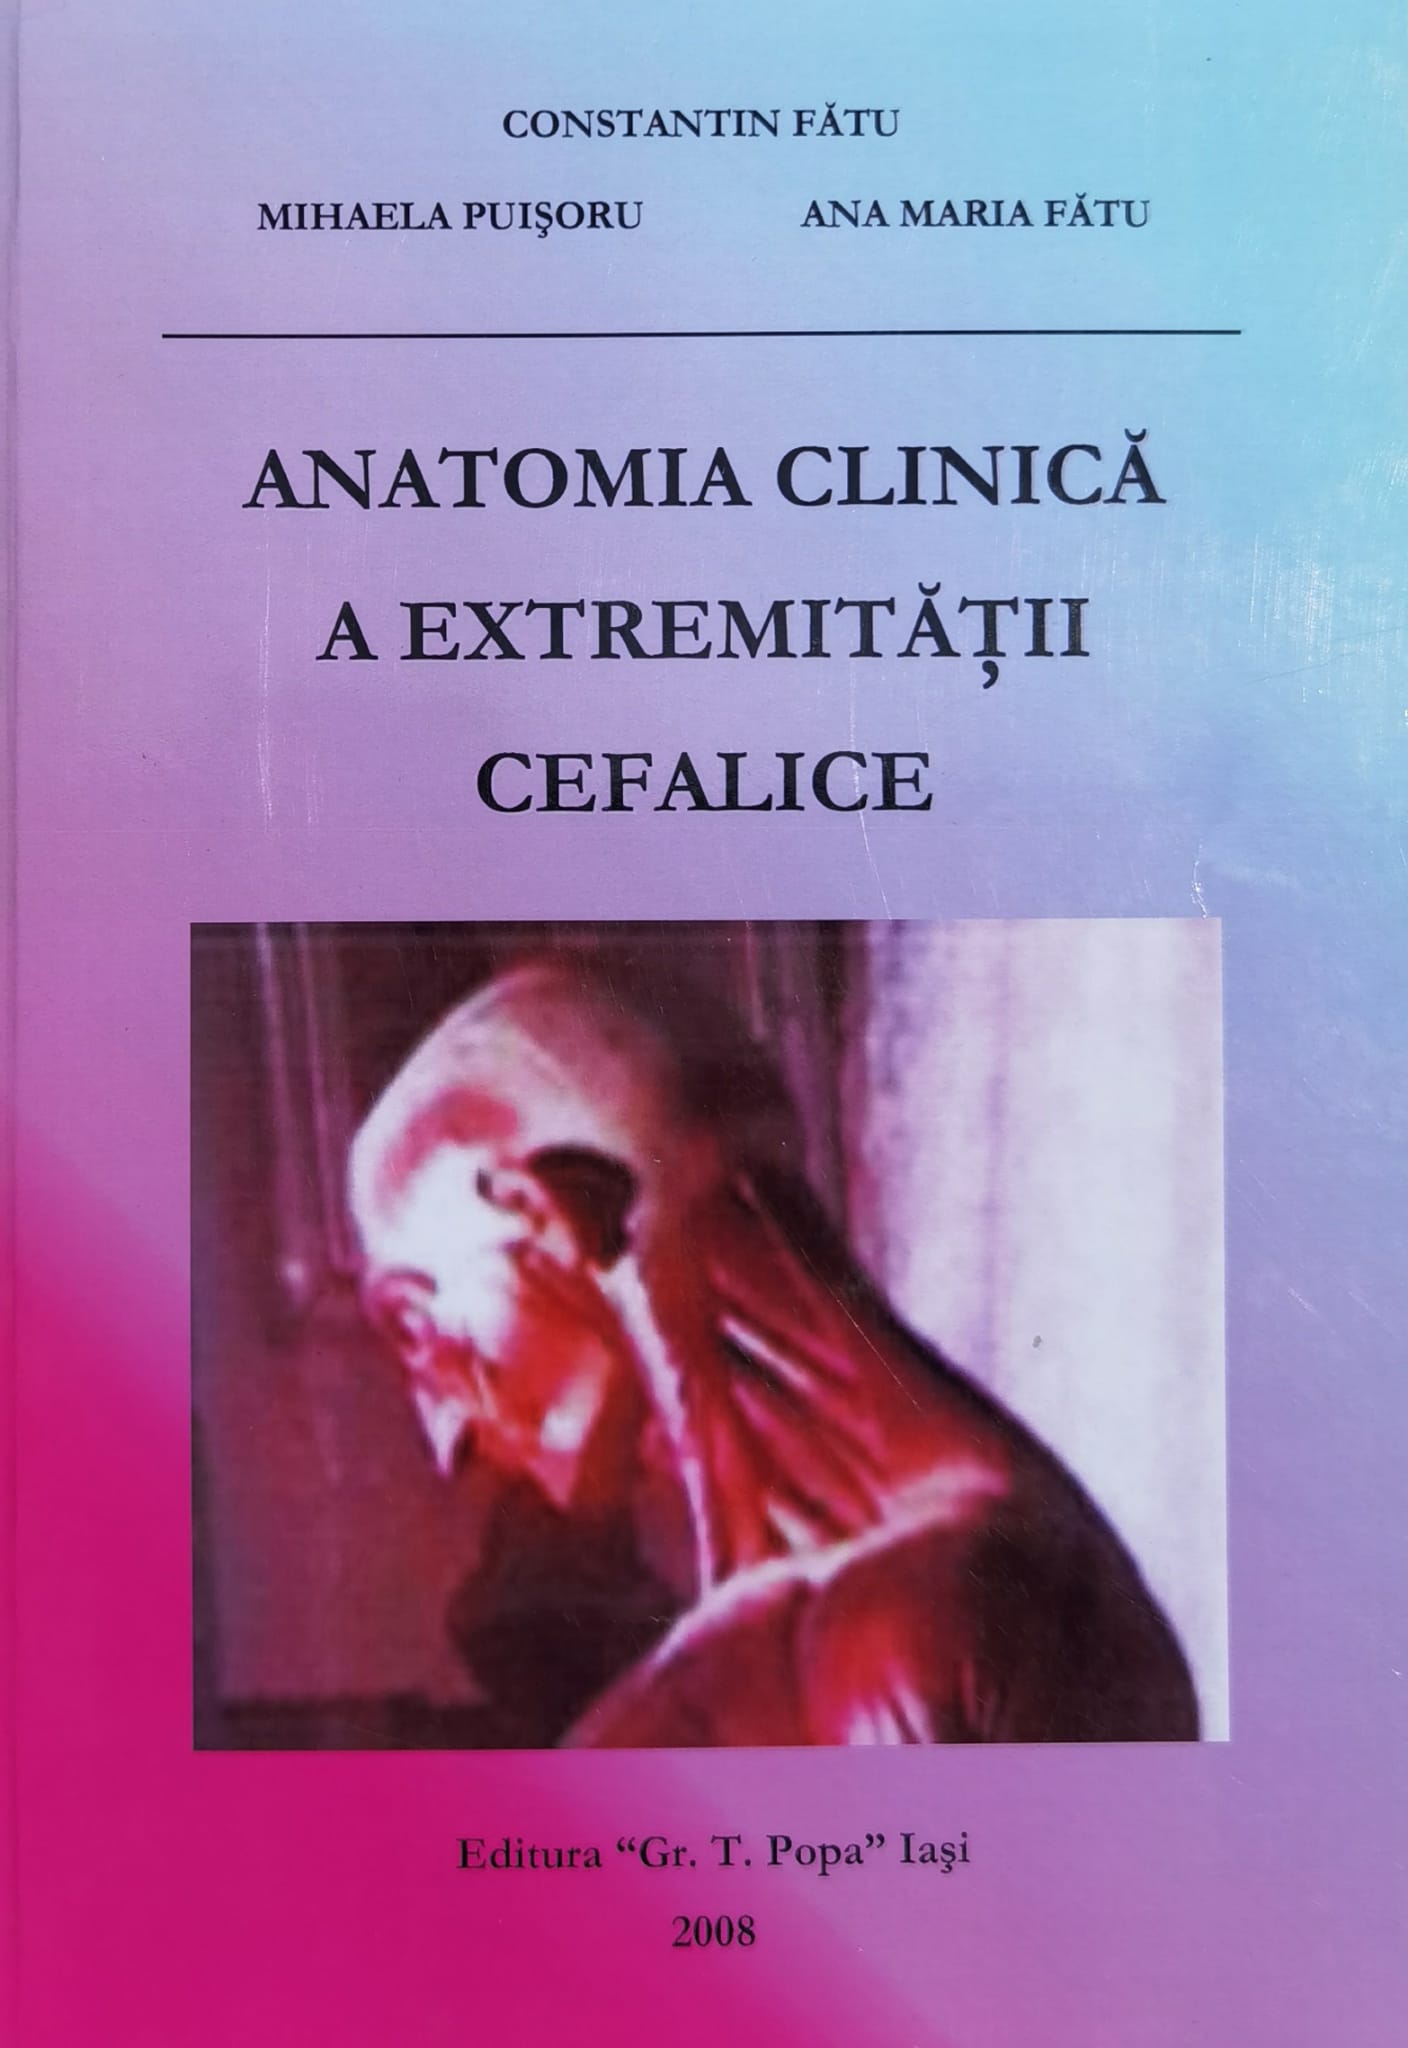 anatomia clinica a extremitatii cefalice                                                             c. fatu, m. puisoru, ana maria fatu                                                                 